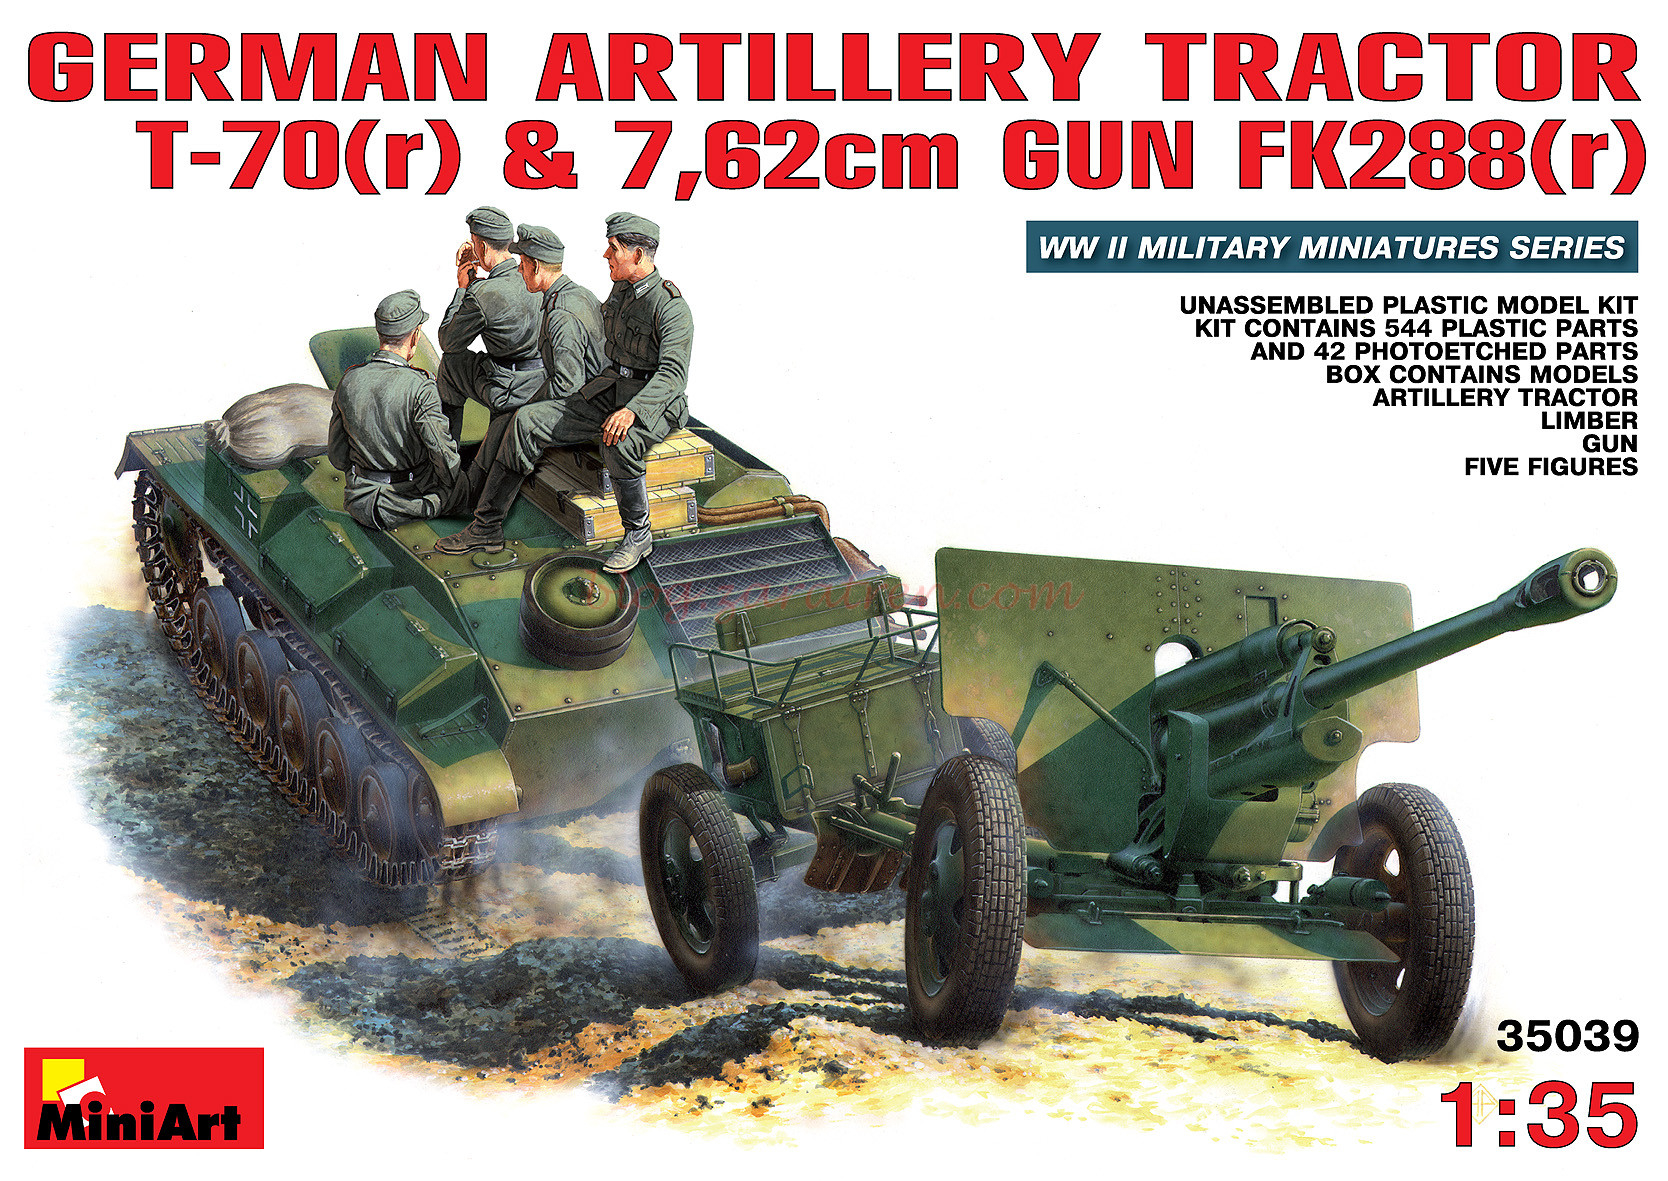 Miniart Models – Pieza de Artilleria Aleman T-70(r), Escala 1:35, Ref: 35039